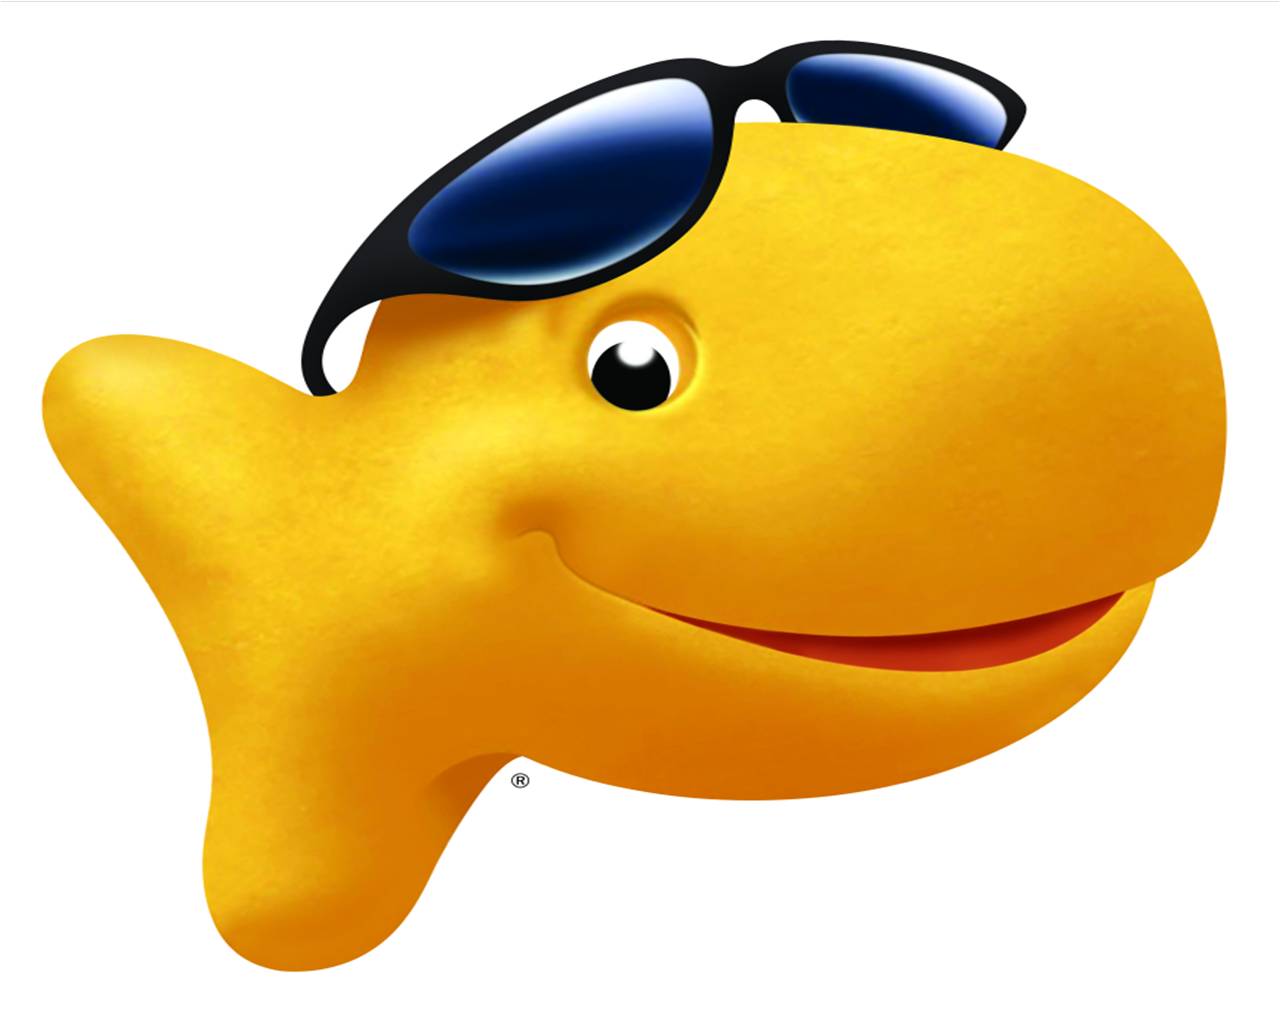 goldfish snack logo